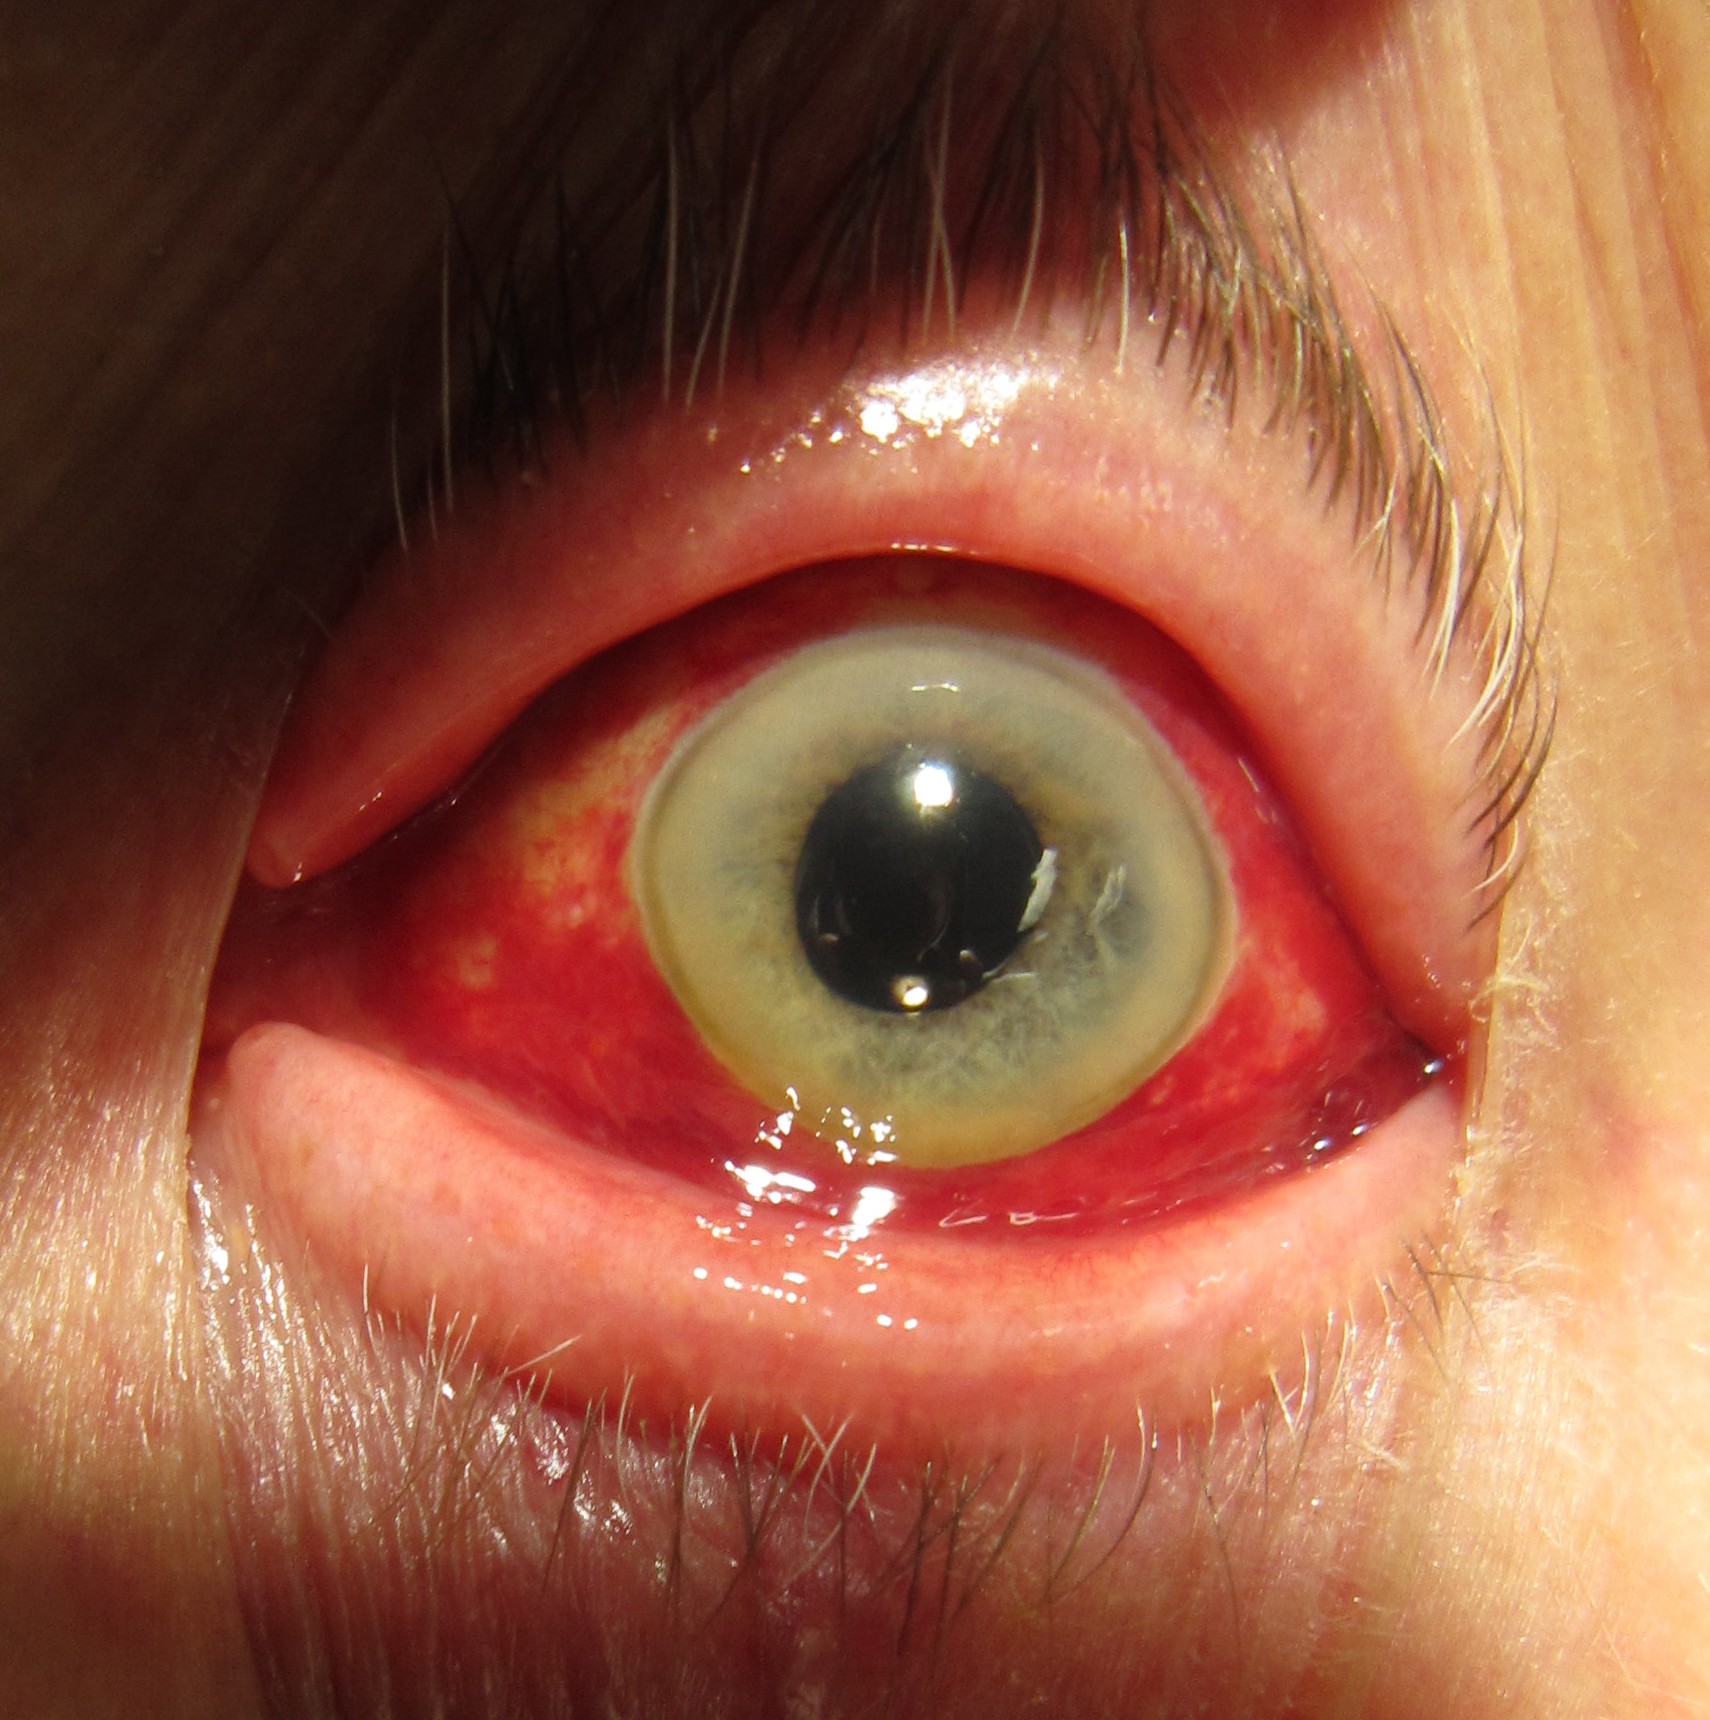 Human eye showing subconjunctival hemorrhage